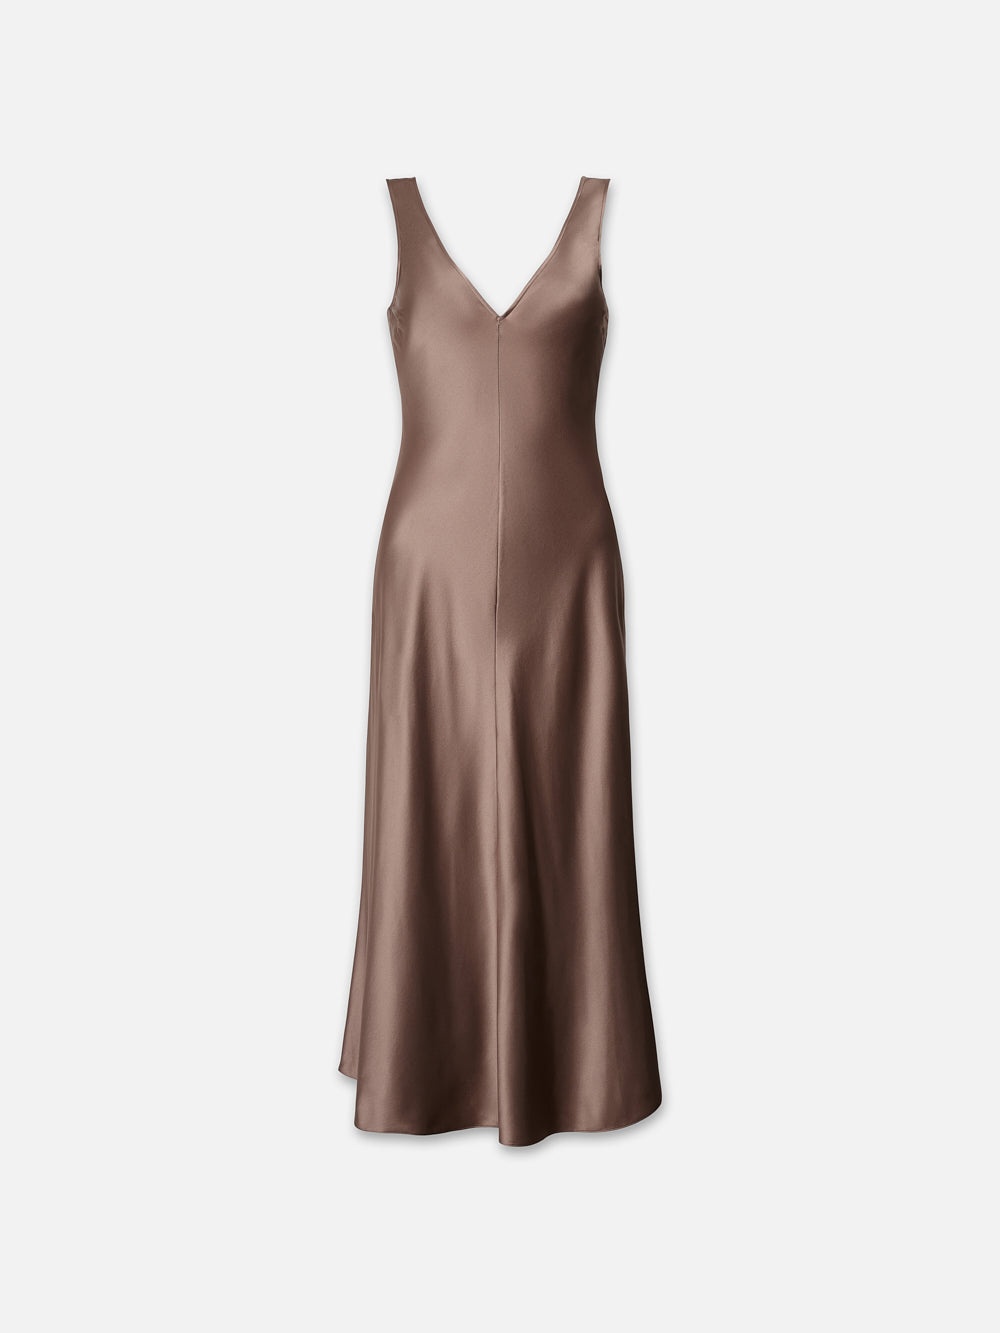 Savannah Dress in Cypress - 1